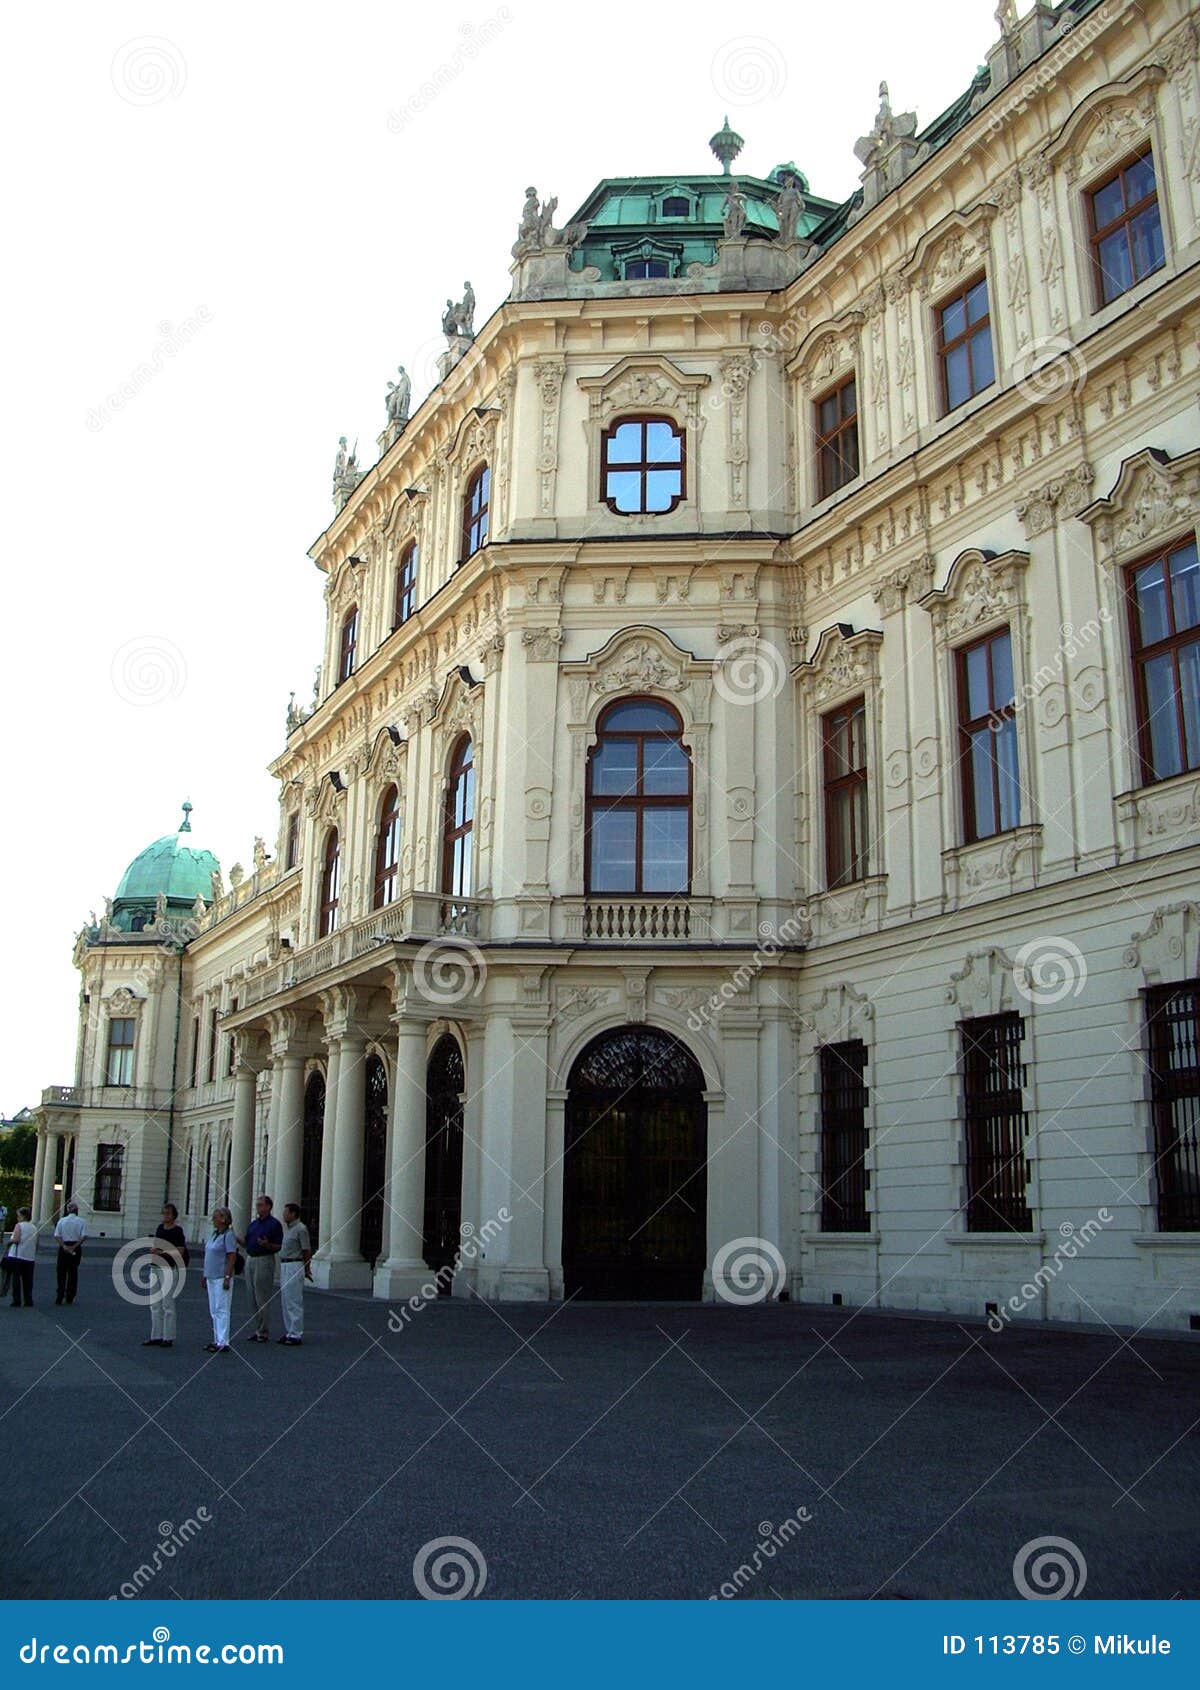 belvedere palace - vienna